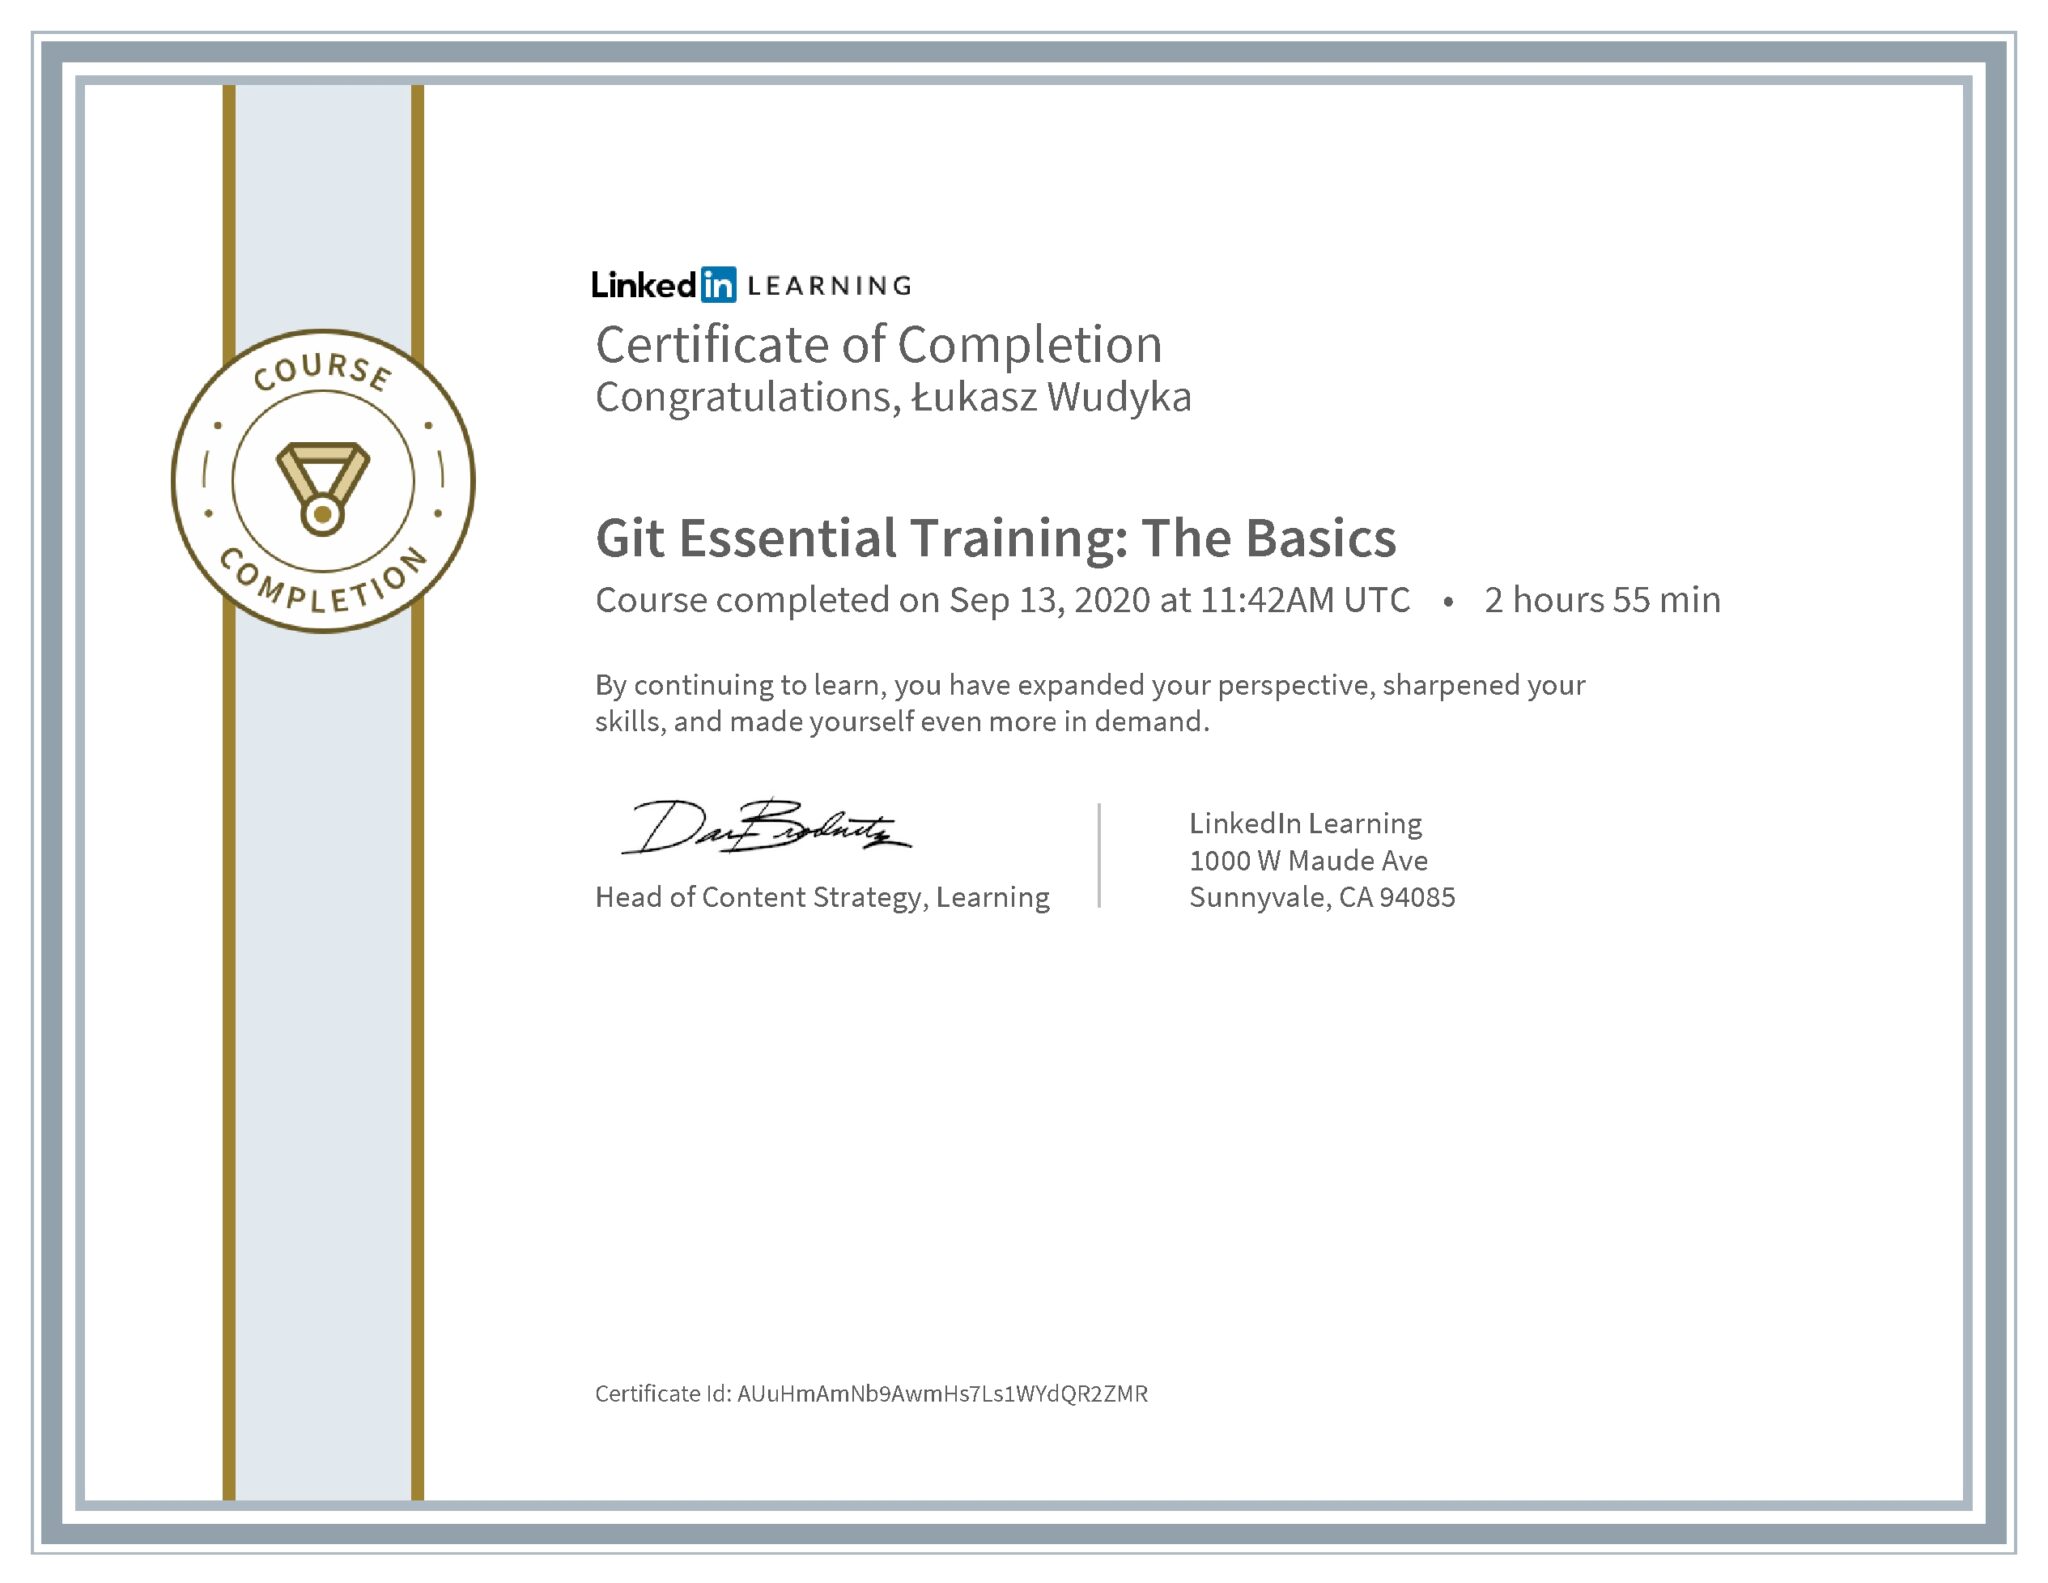 Łukasz Wudyka certyfikat LinkedIn Git Essential Training: The Basics